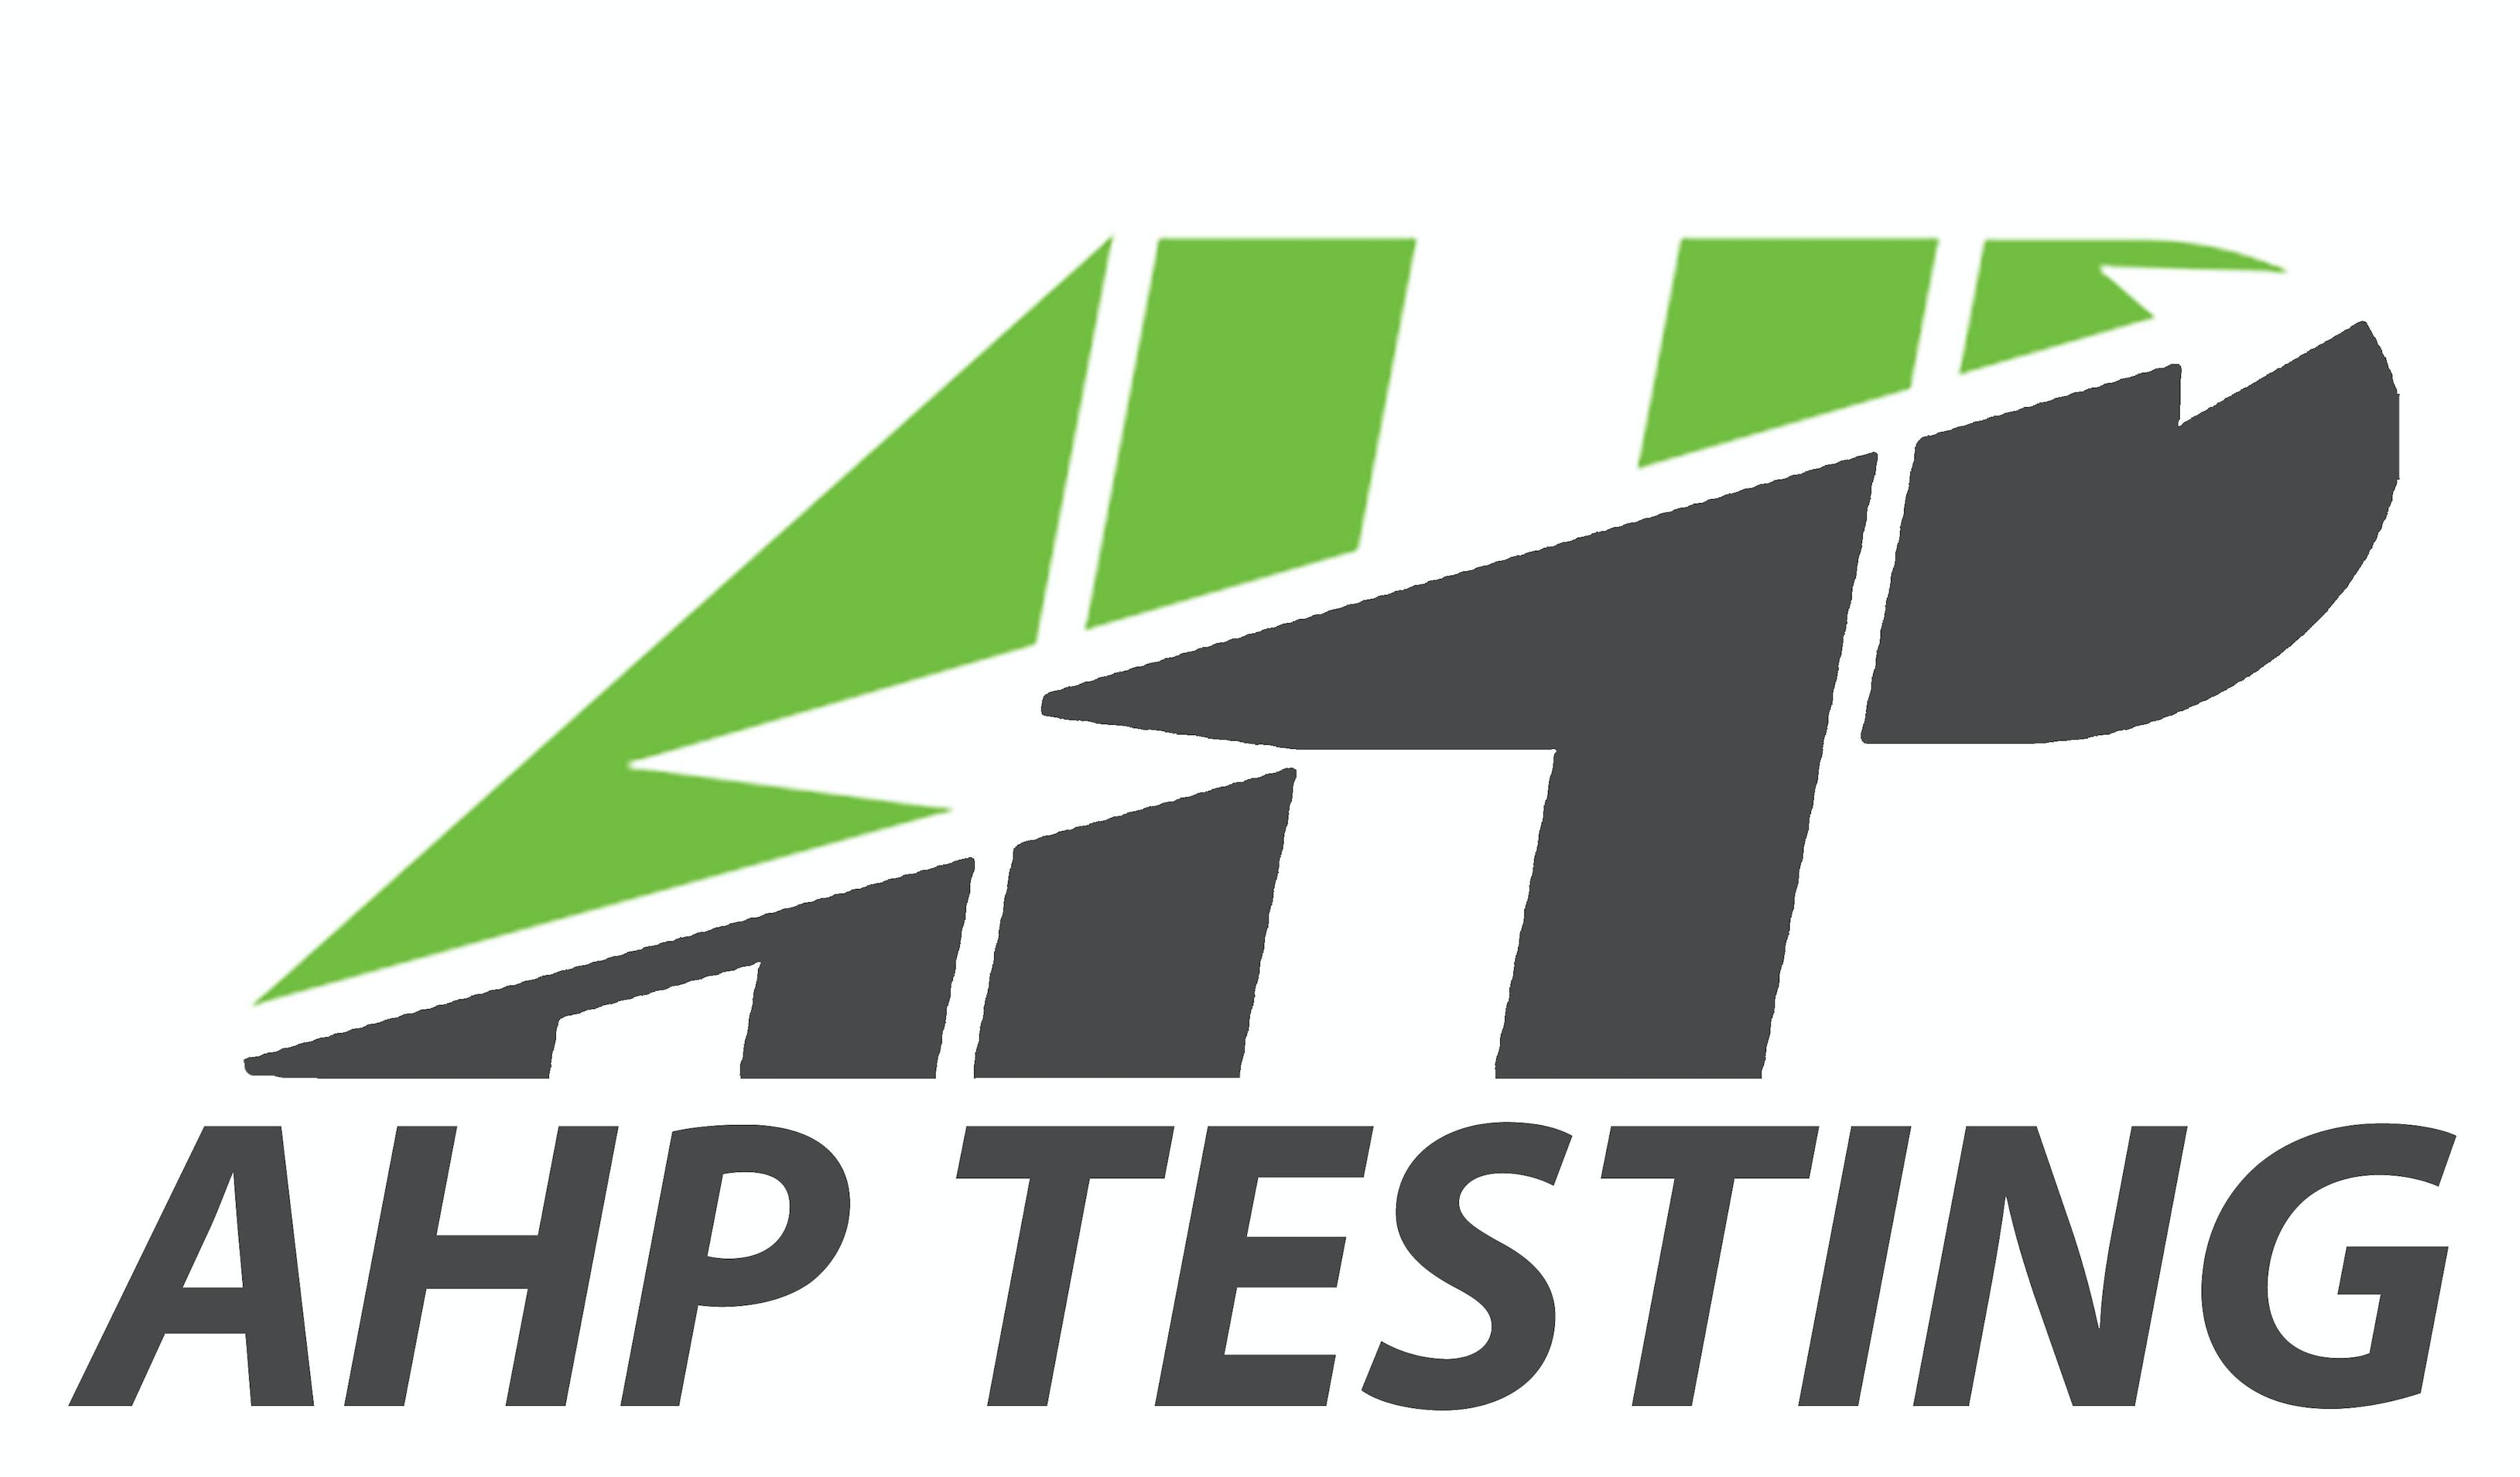 AHP Testing company logo